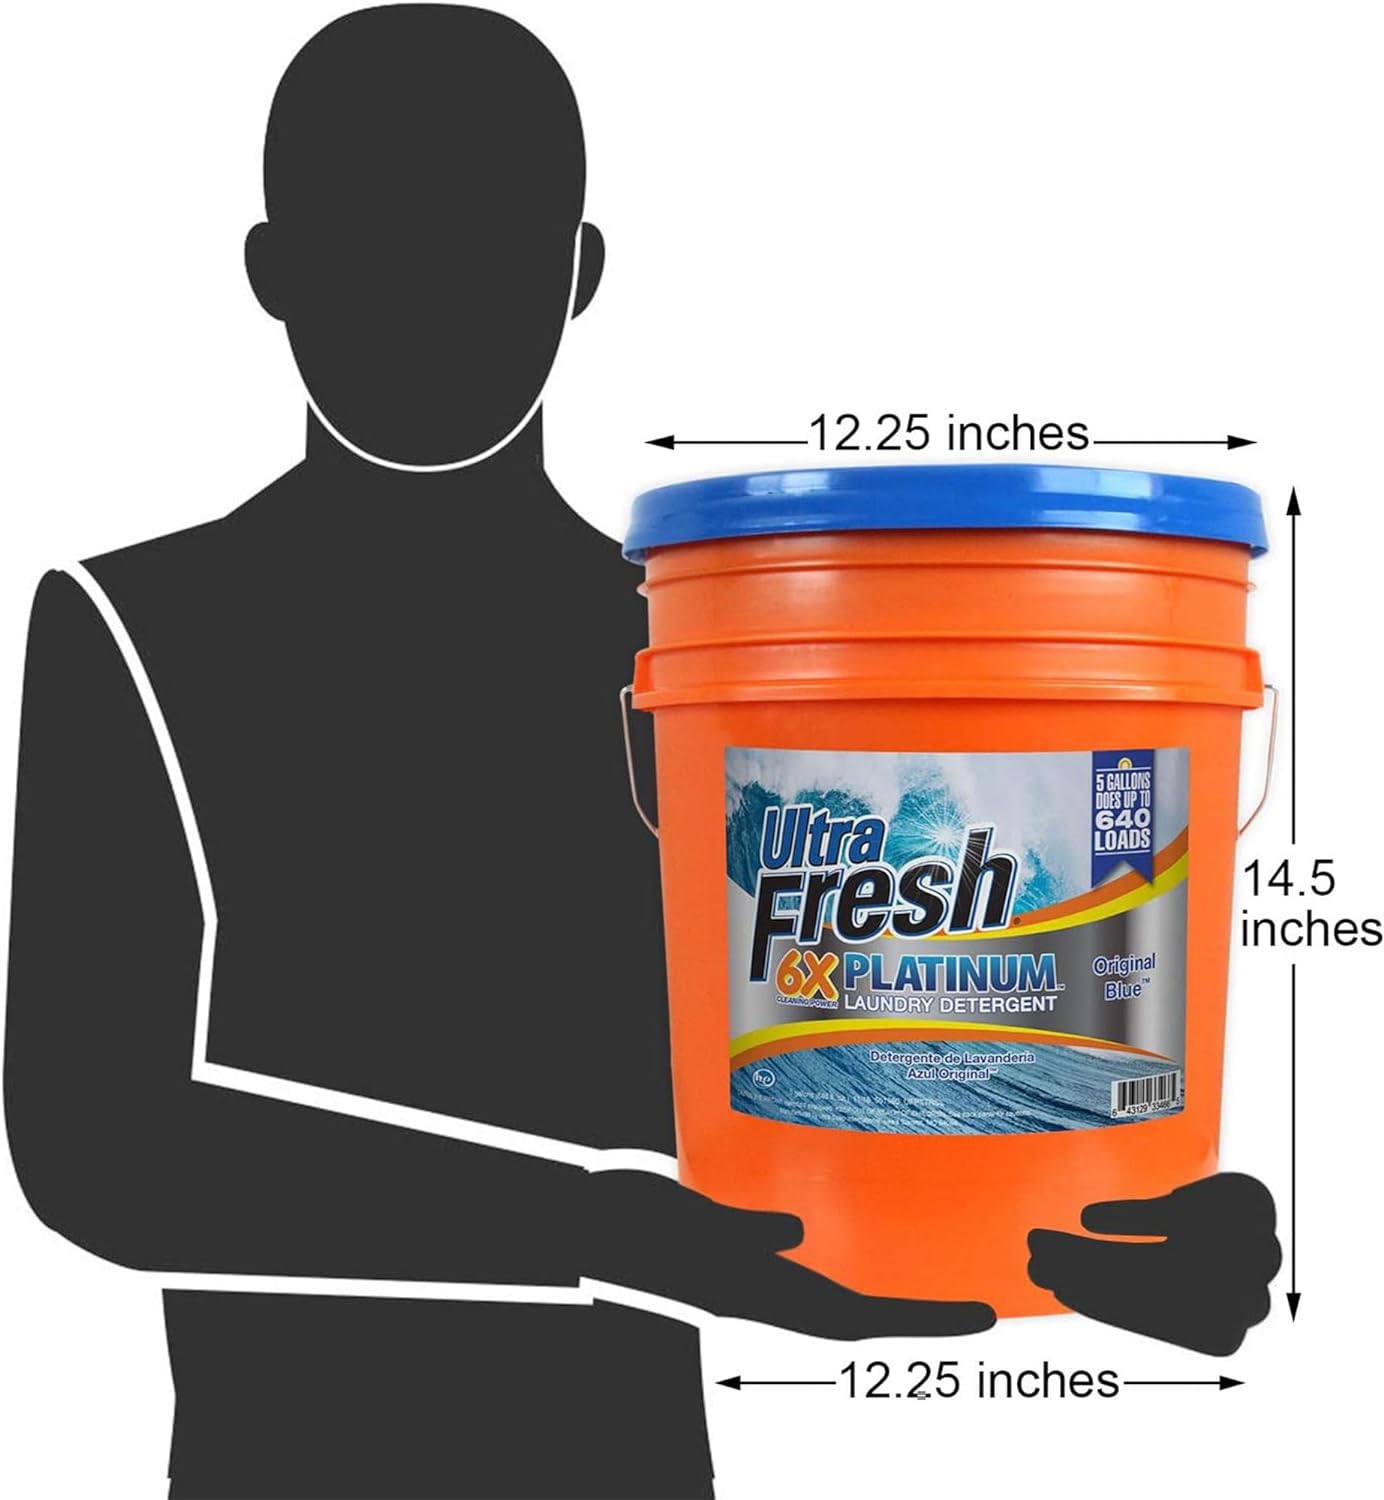 Ultra Fresh® 6X Platinum™ Laundry Detergent - Original Blue™ - 5 Gallons